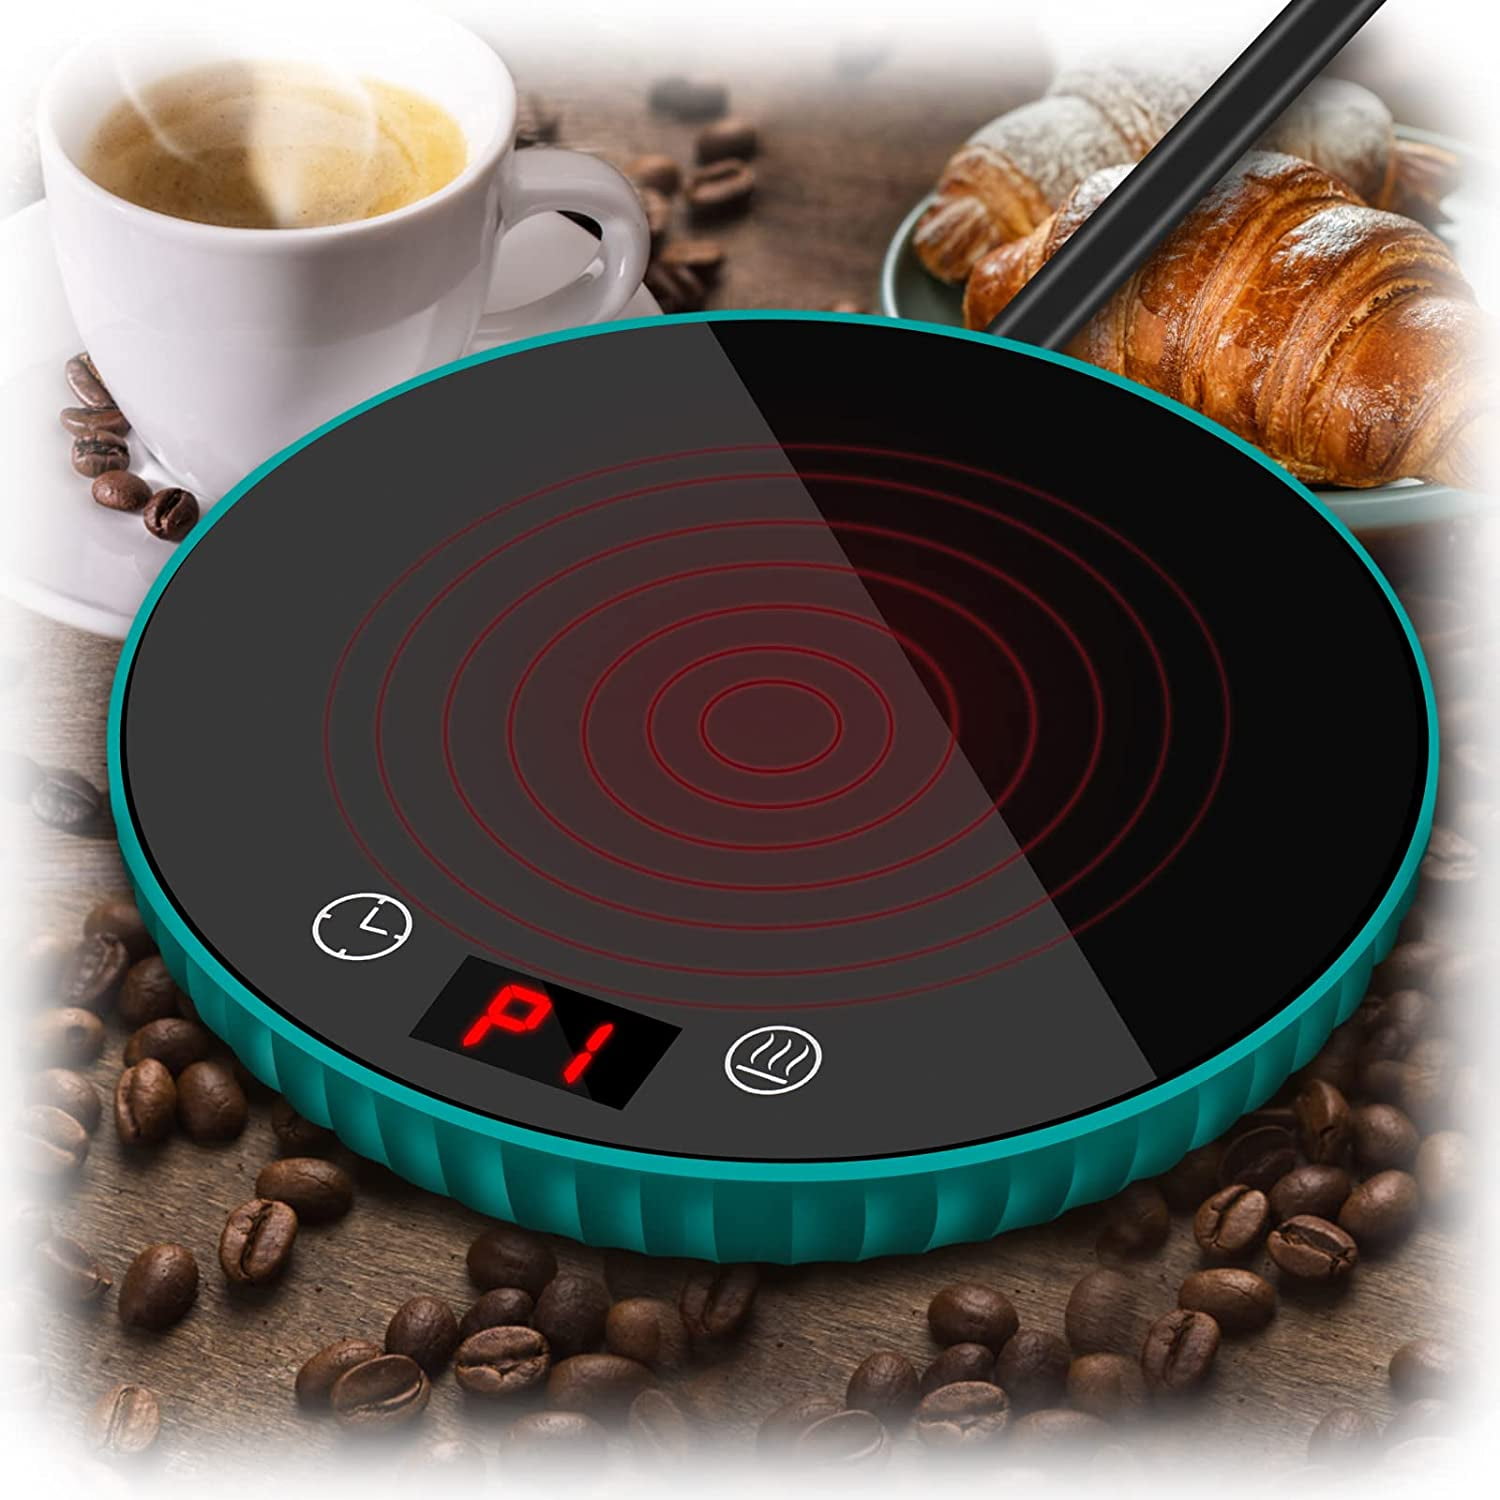 Hoofun Coffee Mug Warmer, Smart Cup Warmer for Desk Auto Shut Off & Timing, Electric Beverage Warmer with 2 Temperature Settings, Wireless Warmer Heating